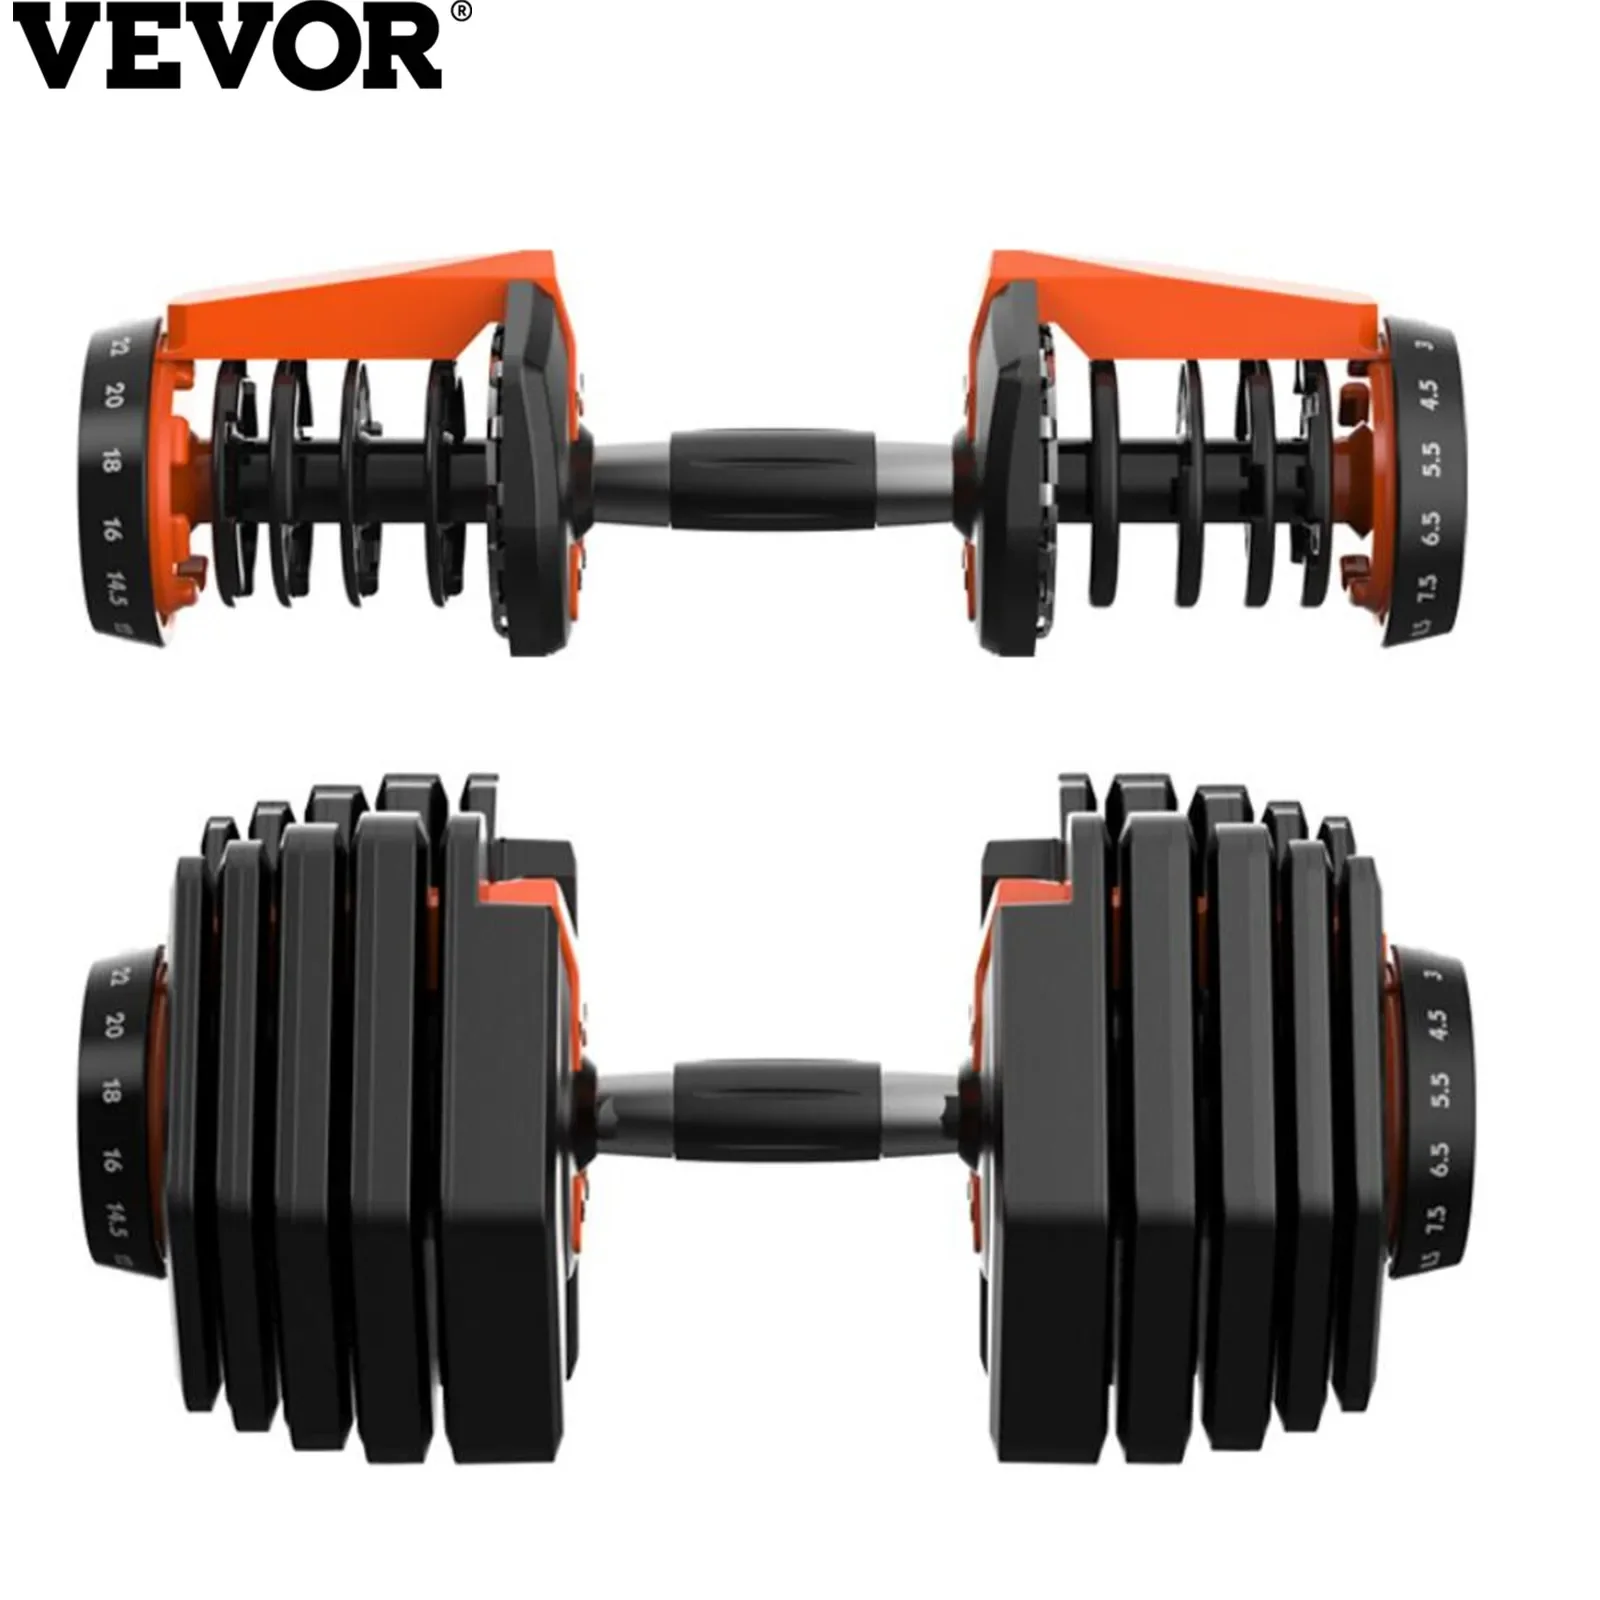 

VEVOR Fitness Equipment Set Dumbbells Weight Select Fitness Workout Gym From 2.5 to 24 KG Adjustable Dumbbell 44